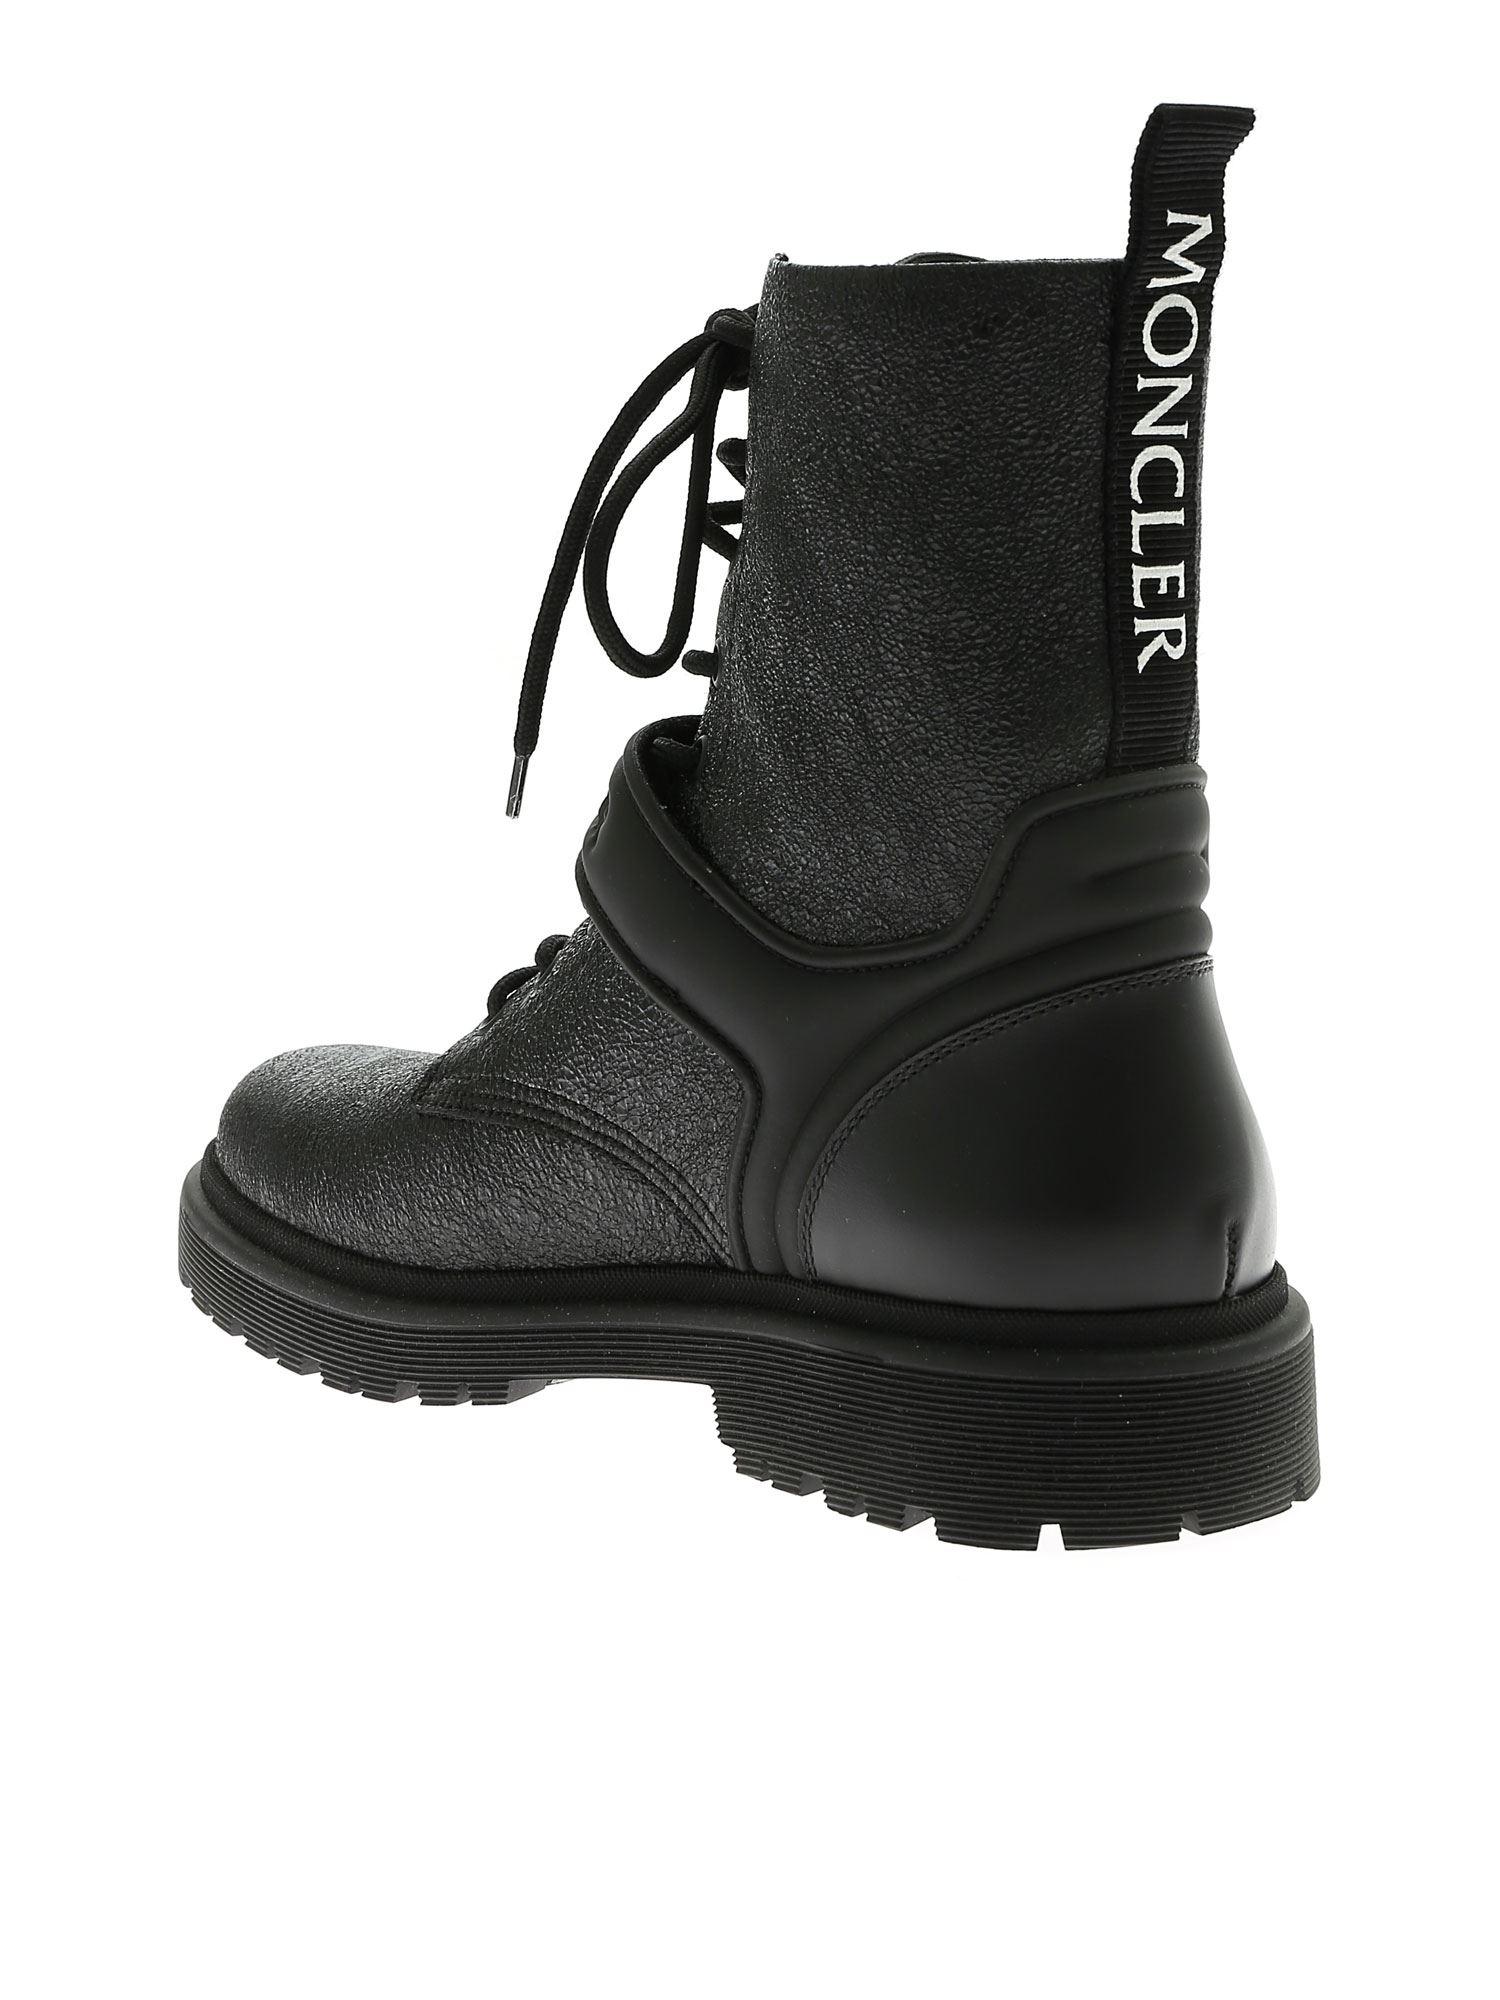 moncler boots